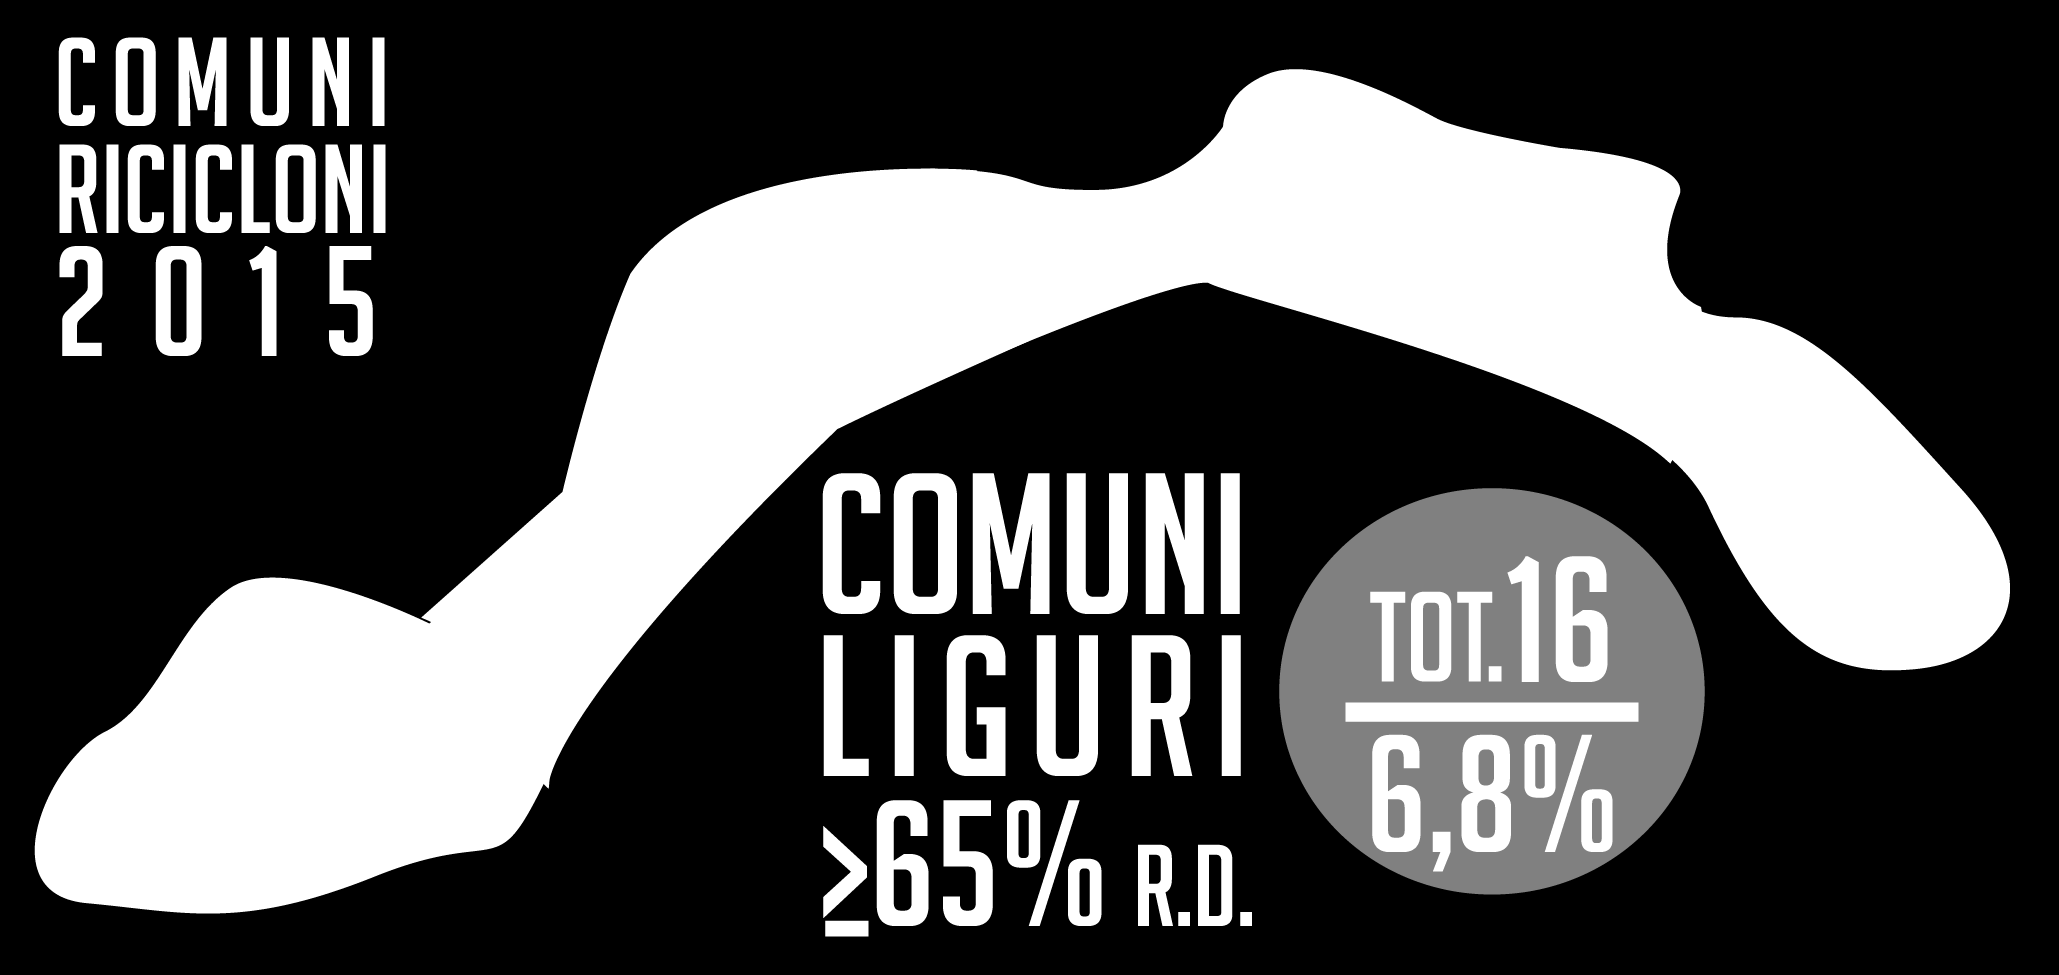 Comuni Ricicloni LIGURIA 2015 5 COMUNI RICICLONI PROVINCIA ABITANTI % R.D.